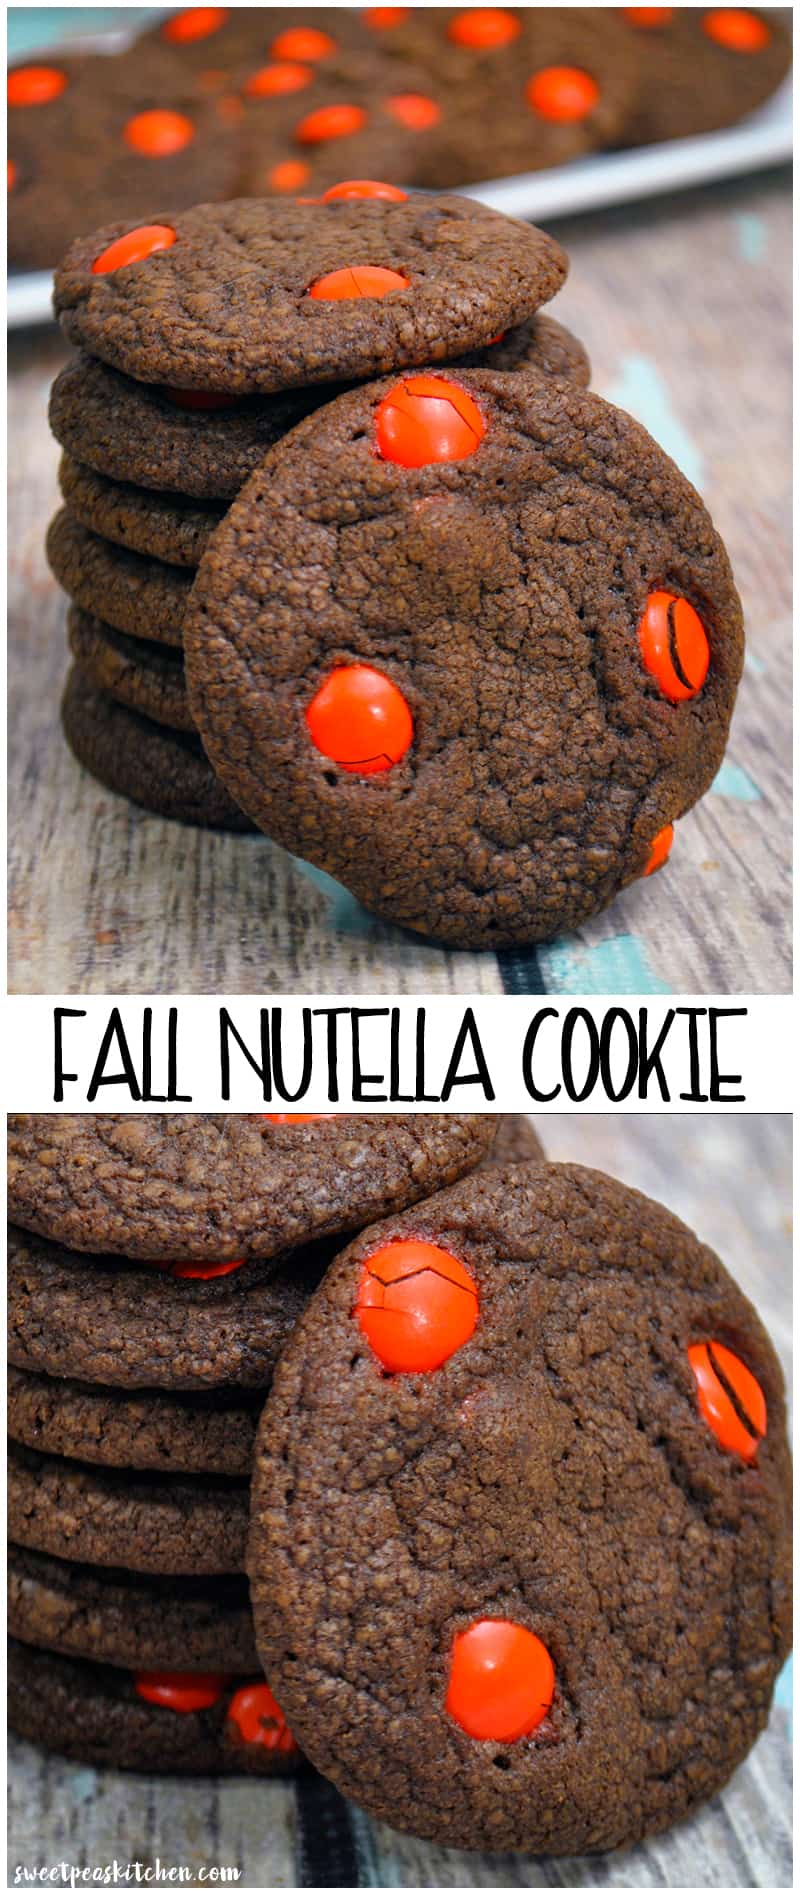 Fall Nutella Cookie Recipe